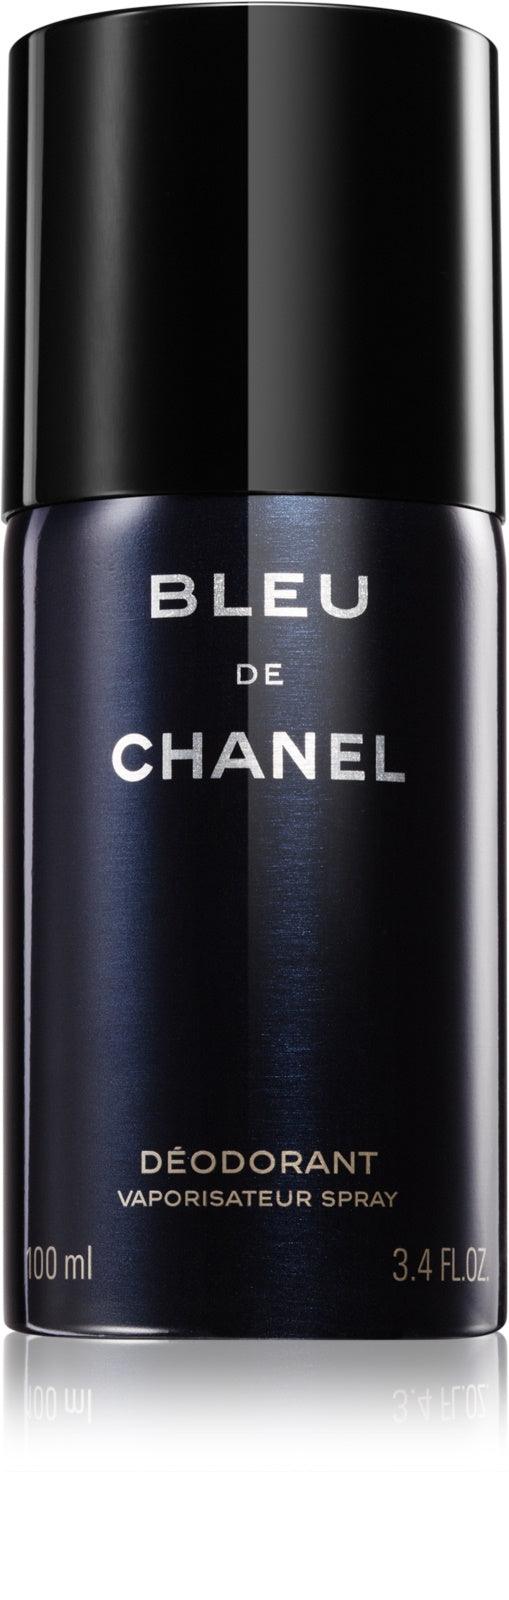 chanel bleu de deodorant spray 3.4 oz